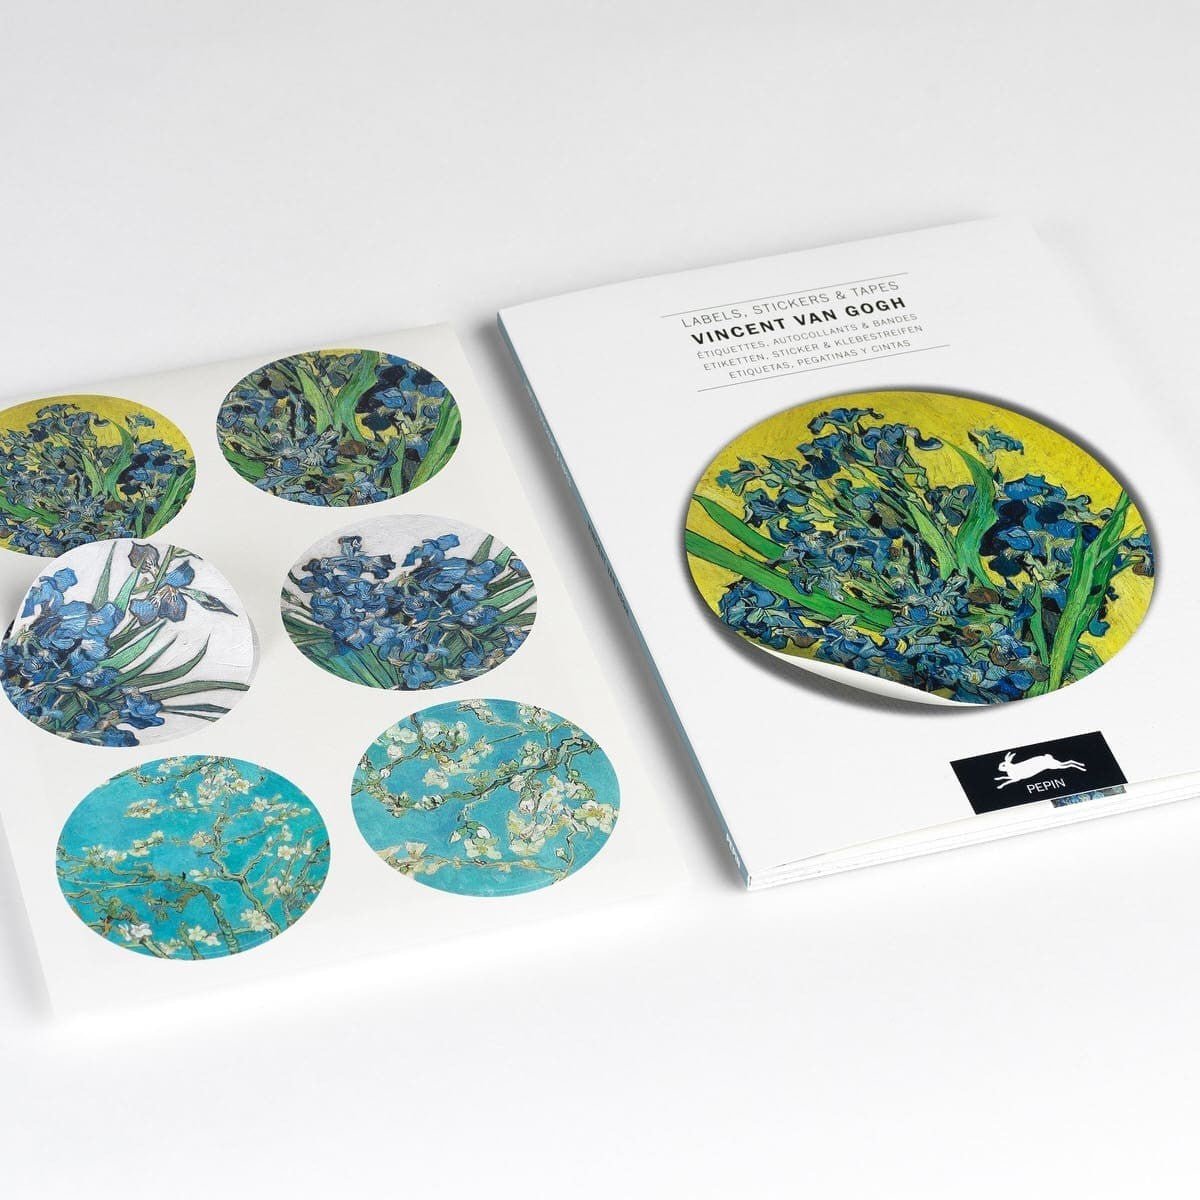 Pepin Labels, stickers & tape Sticker book - Vincent van Gogh - Pepin Press - Tidformera